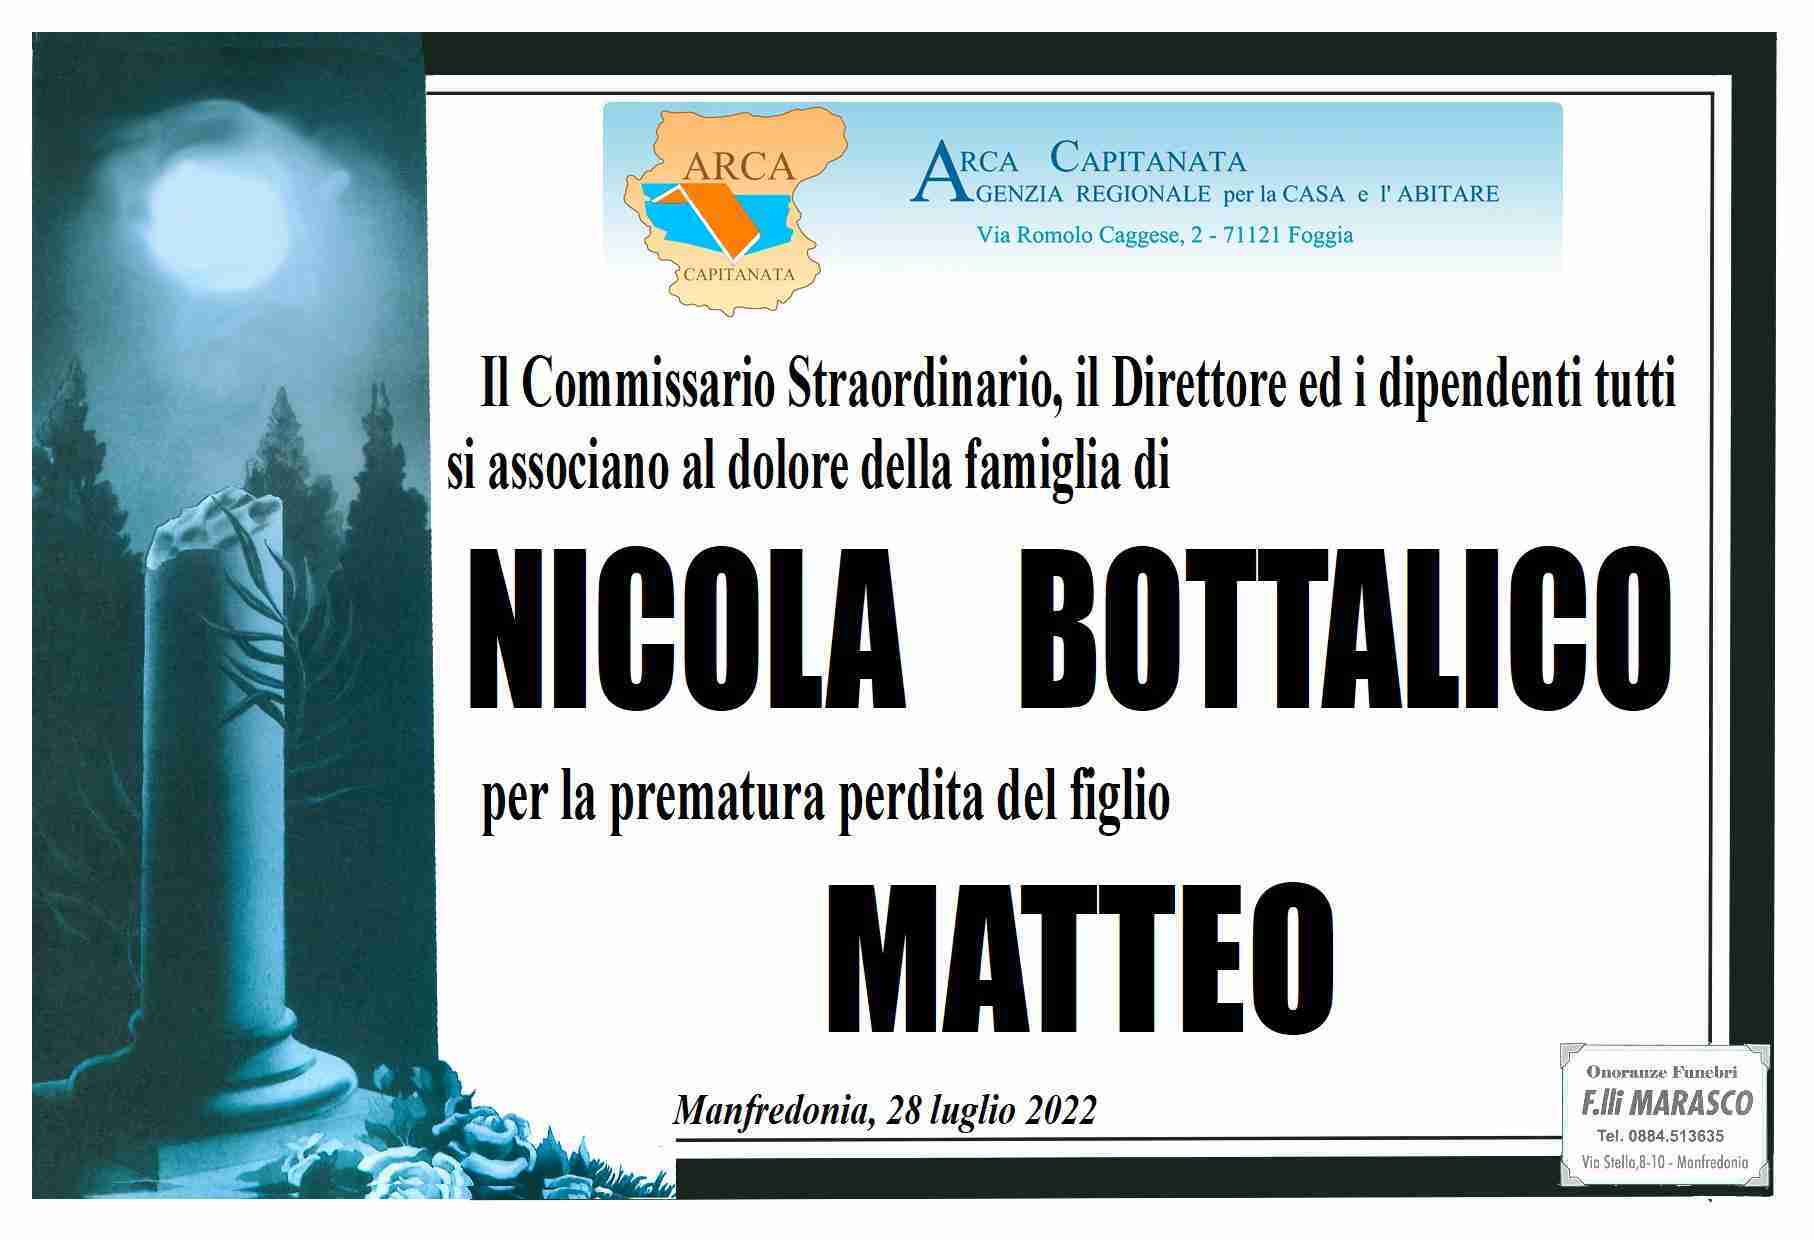 Matteo Bottalico